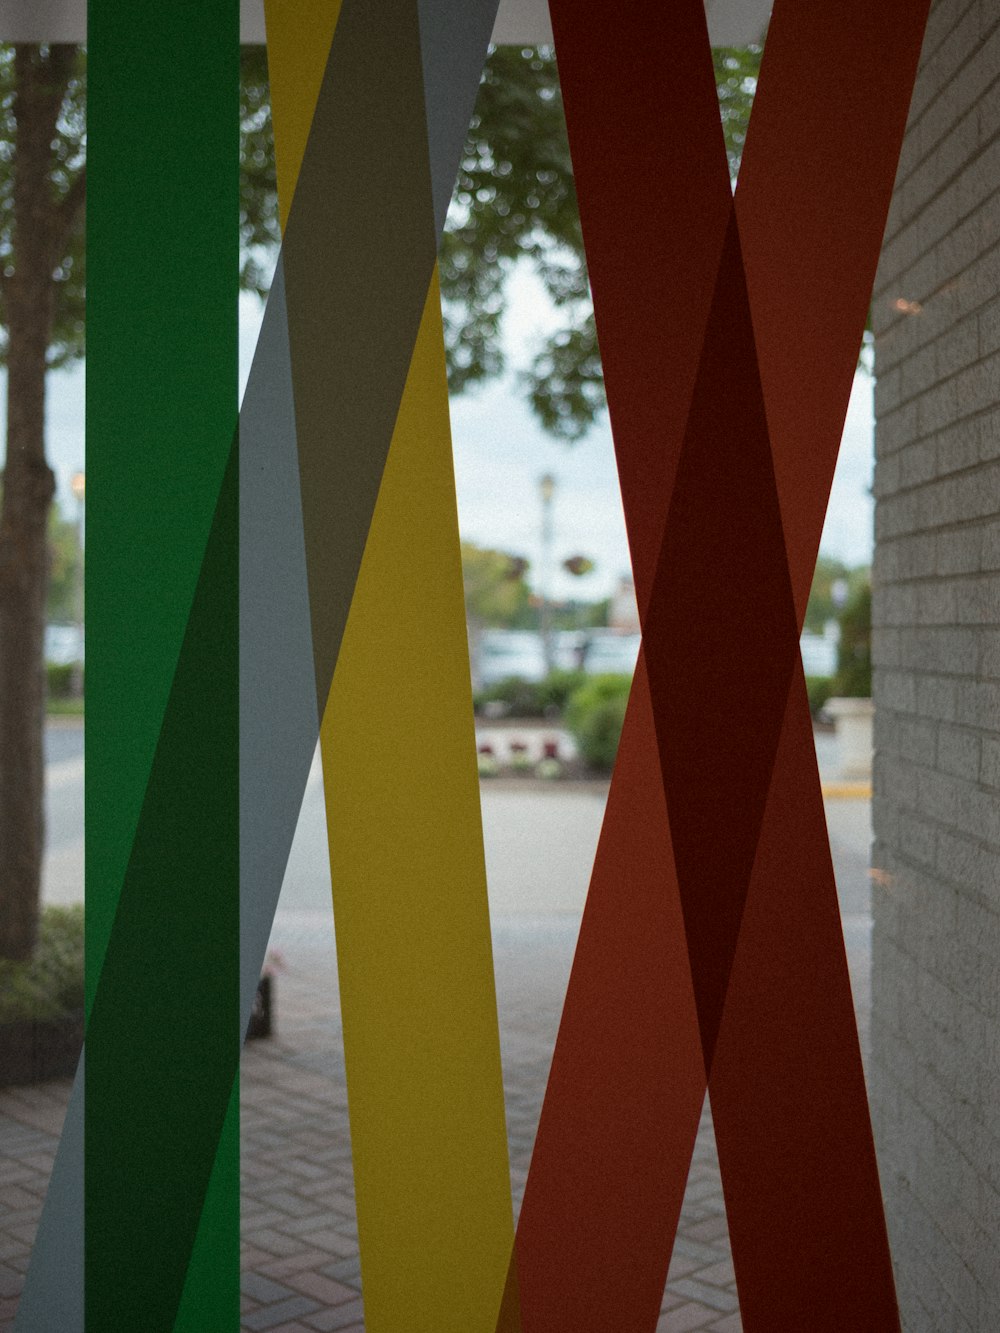 a close up of a multicolored sculpture near a building